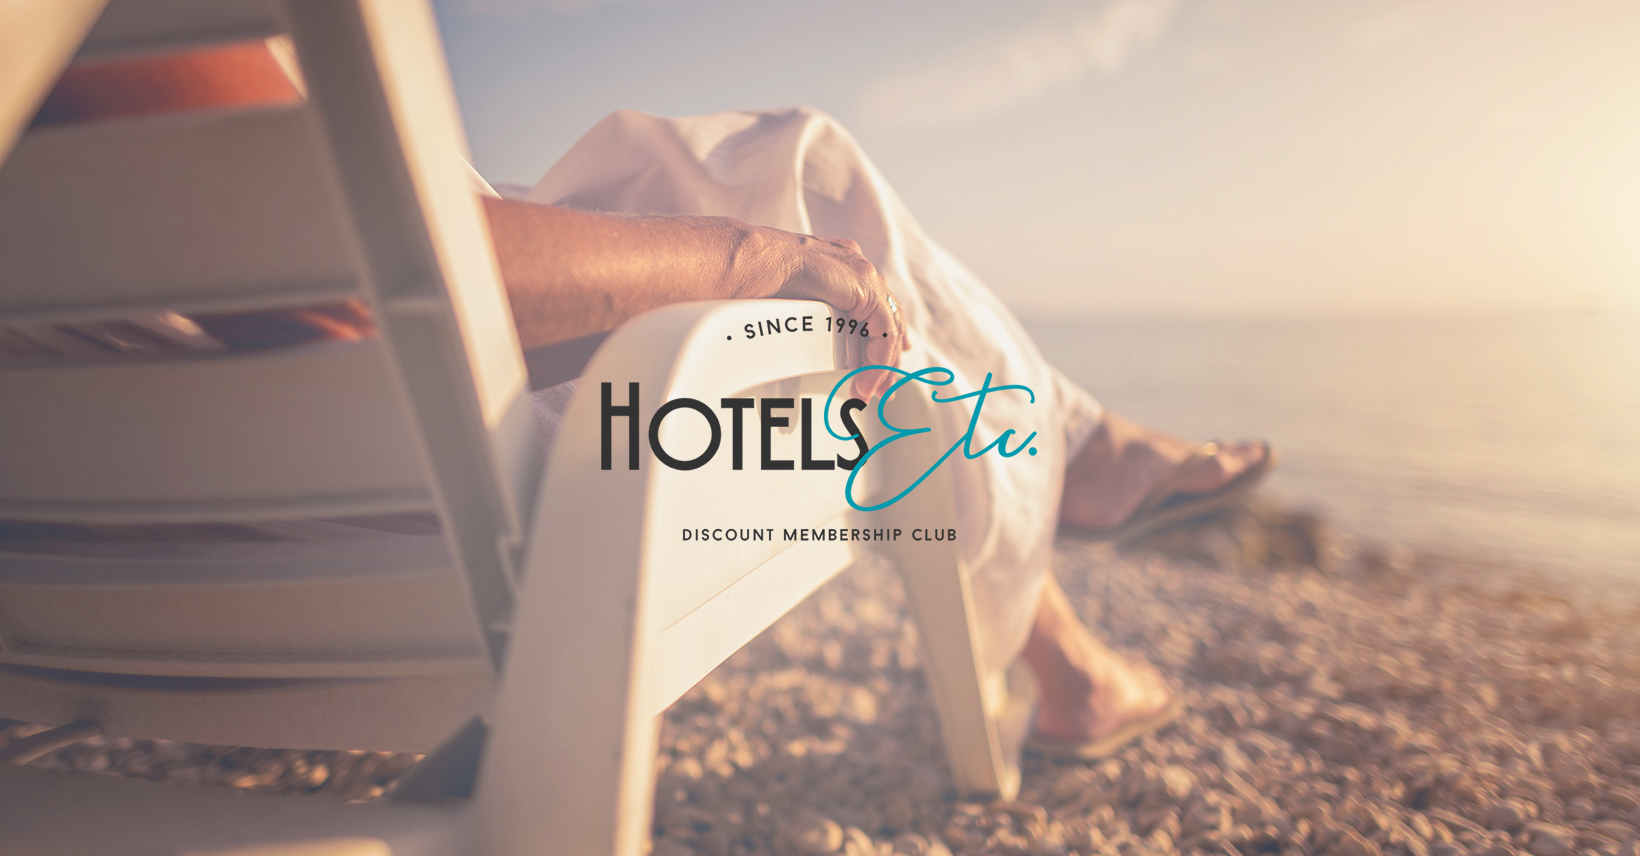 CUG Hotels, Private & Corporate Hotel Discounts | Travel Discounts Club